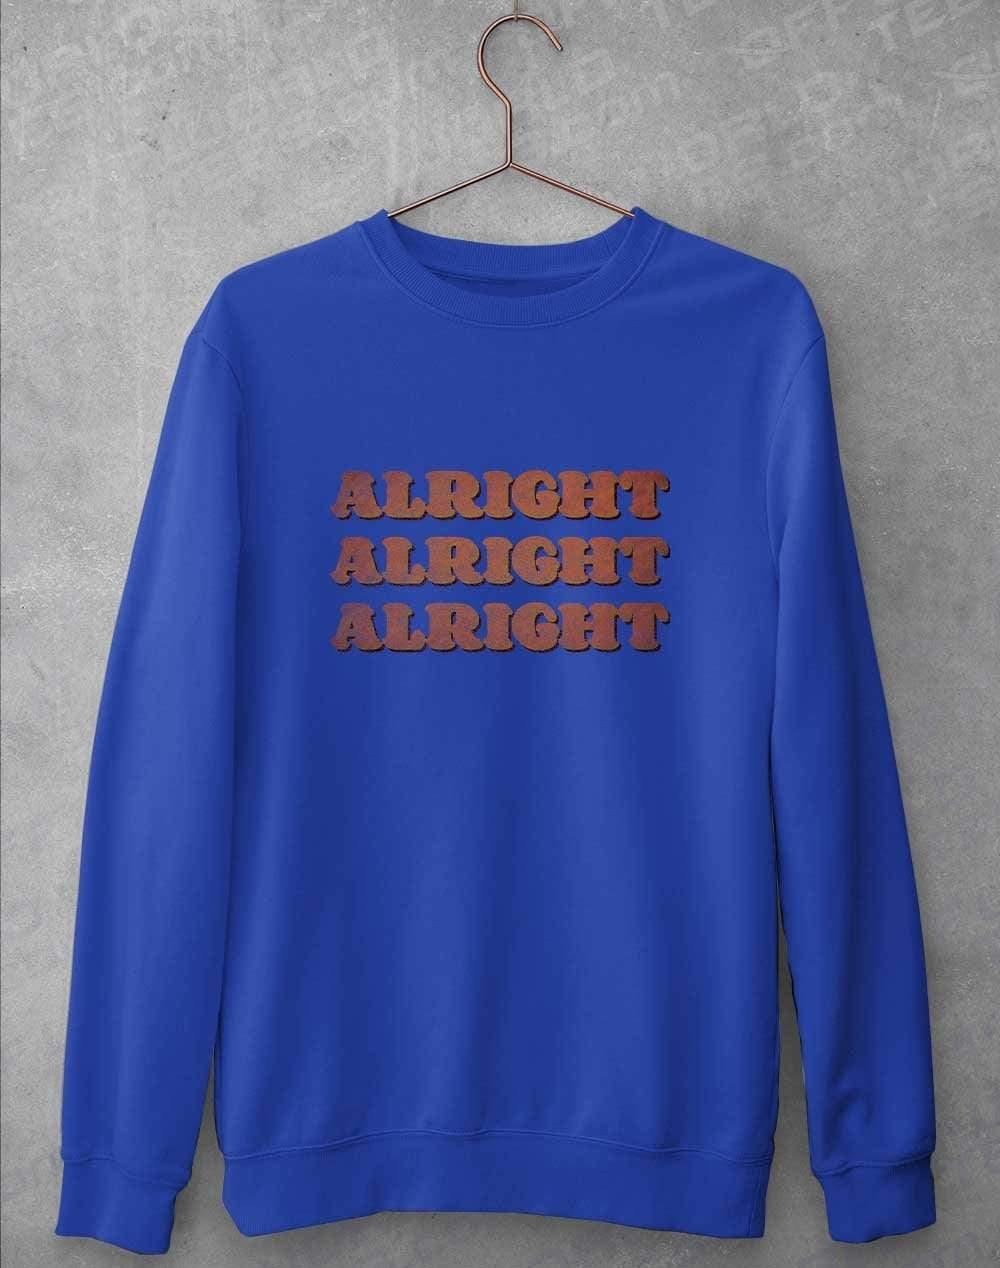 Alright Alright Alright Sweatshirt S / Royal Blue  - Off World Tees